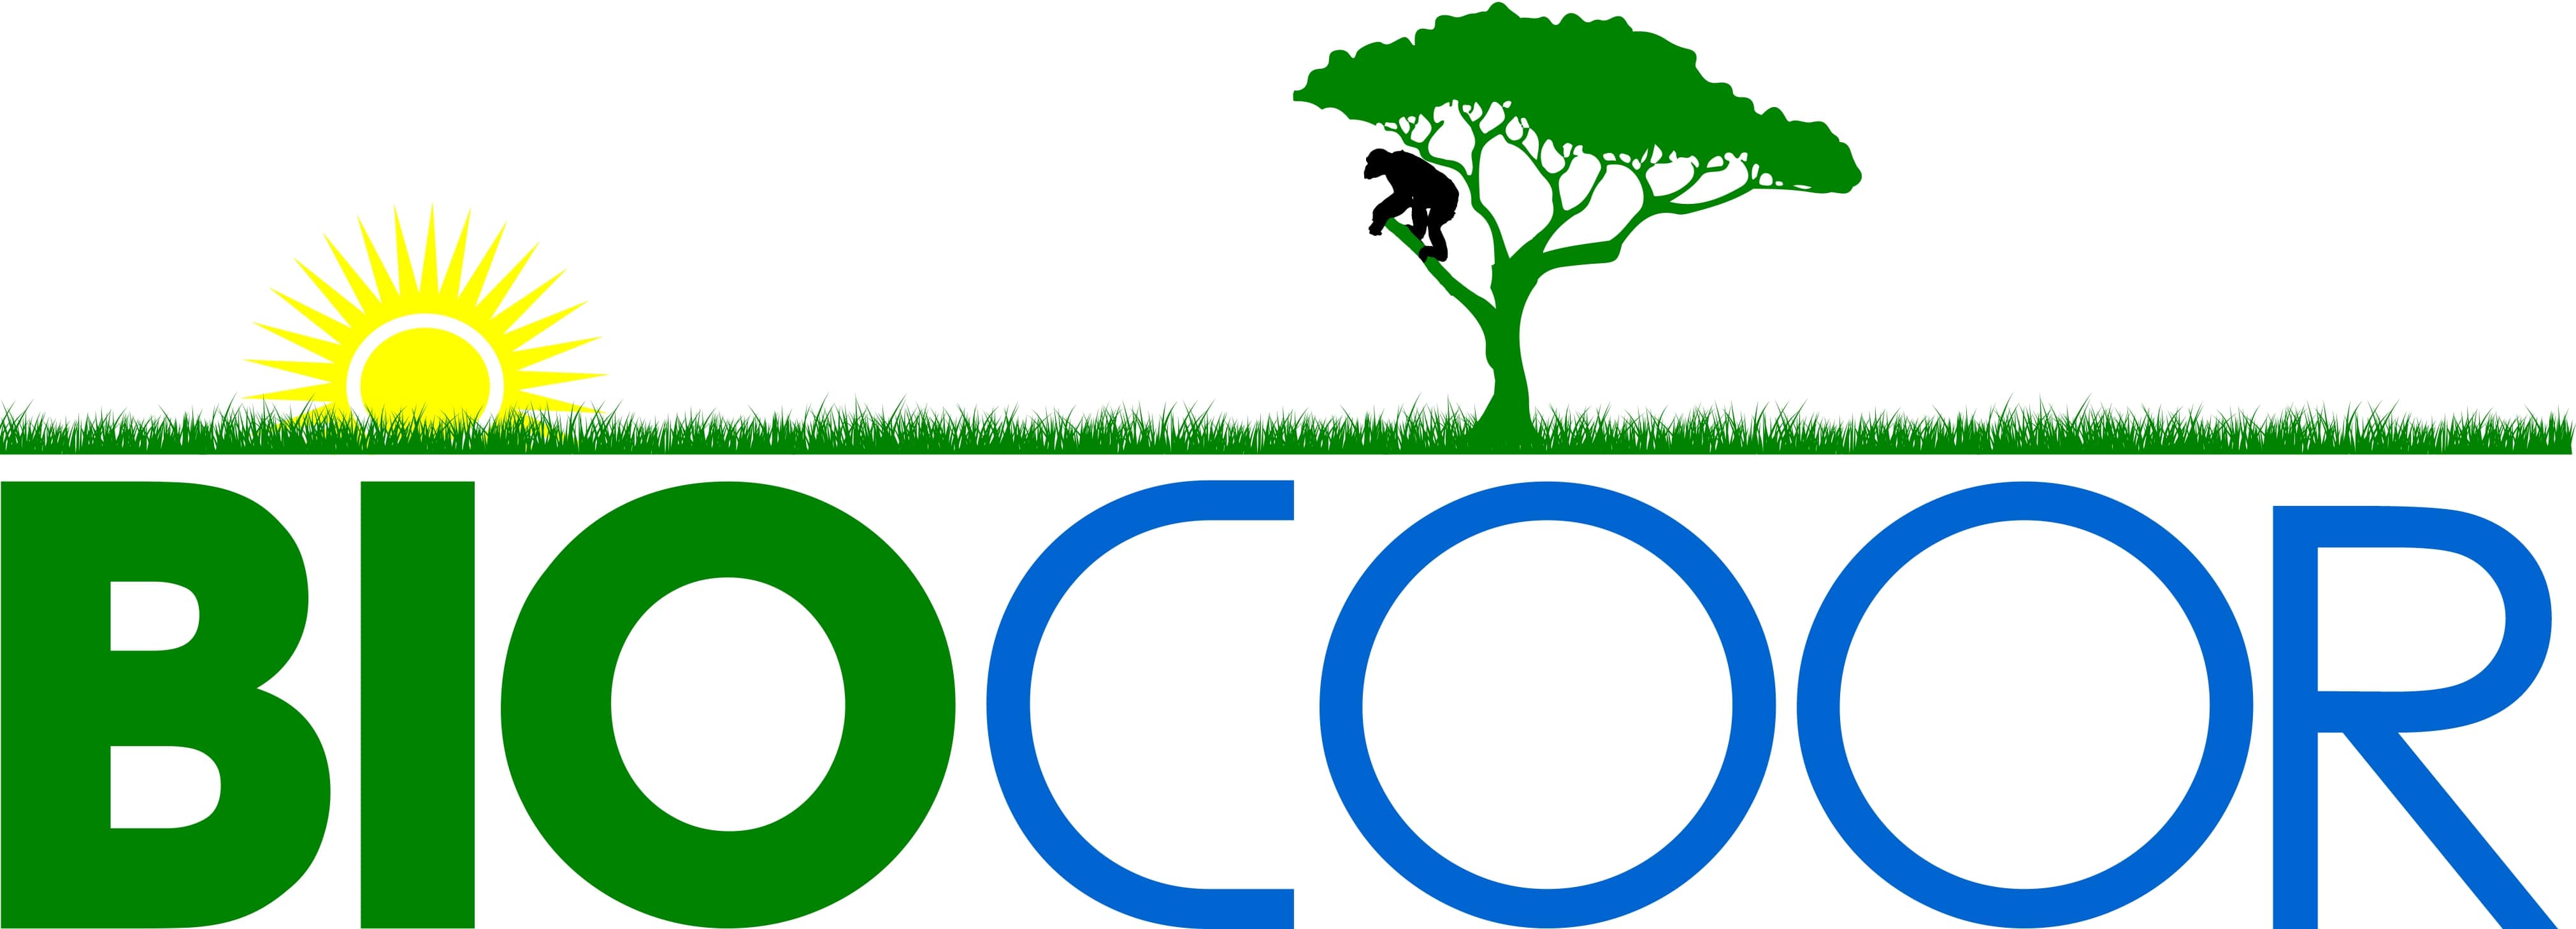 Biodiversity and Conservation Organization